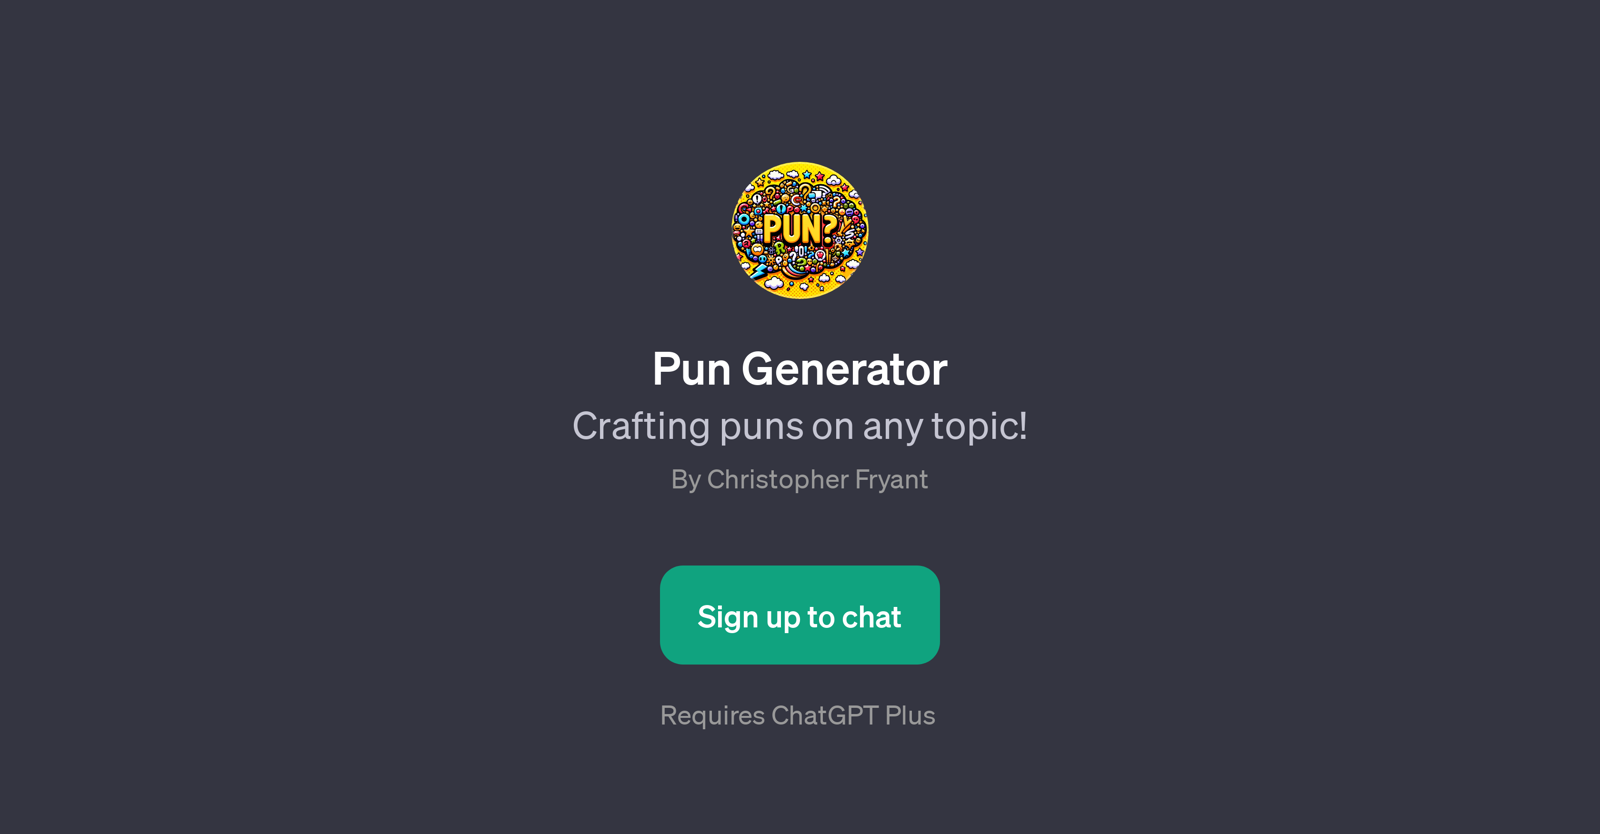 Pun Generator website